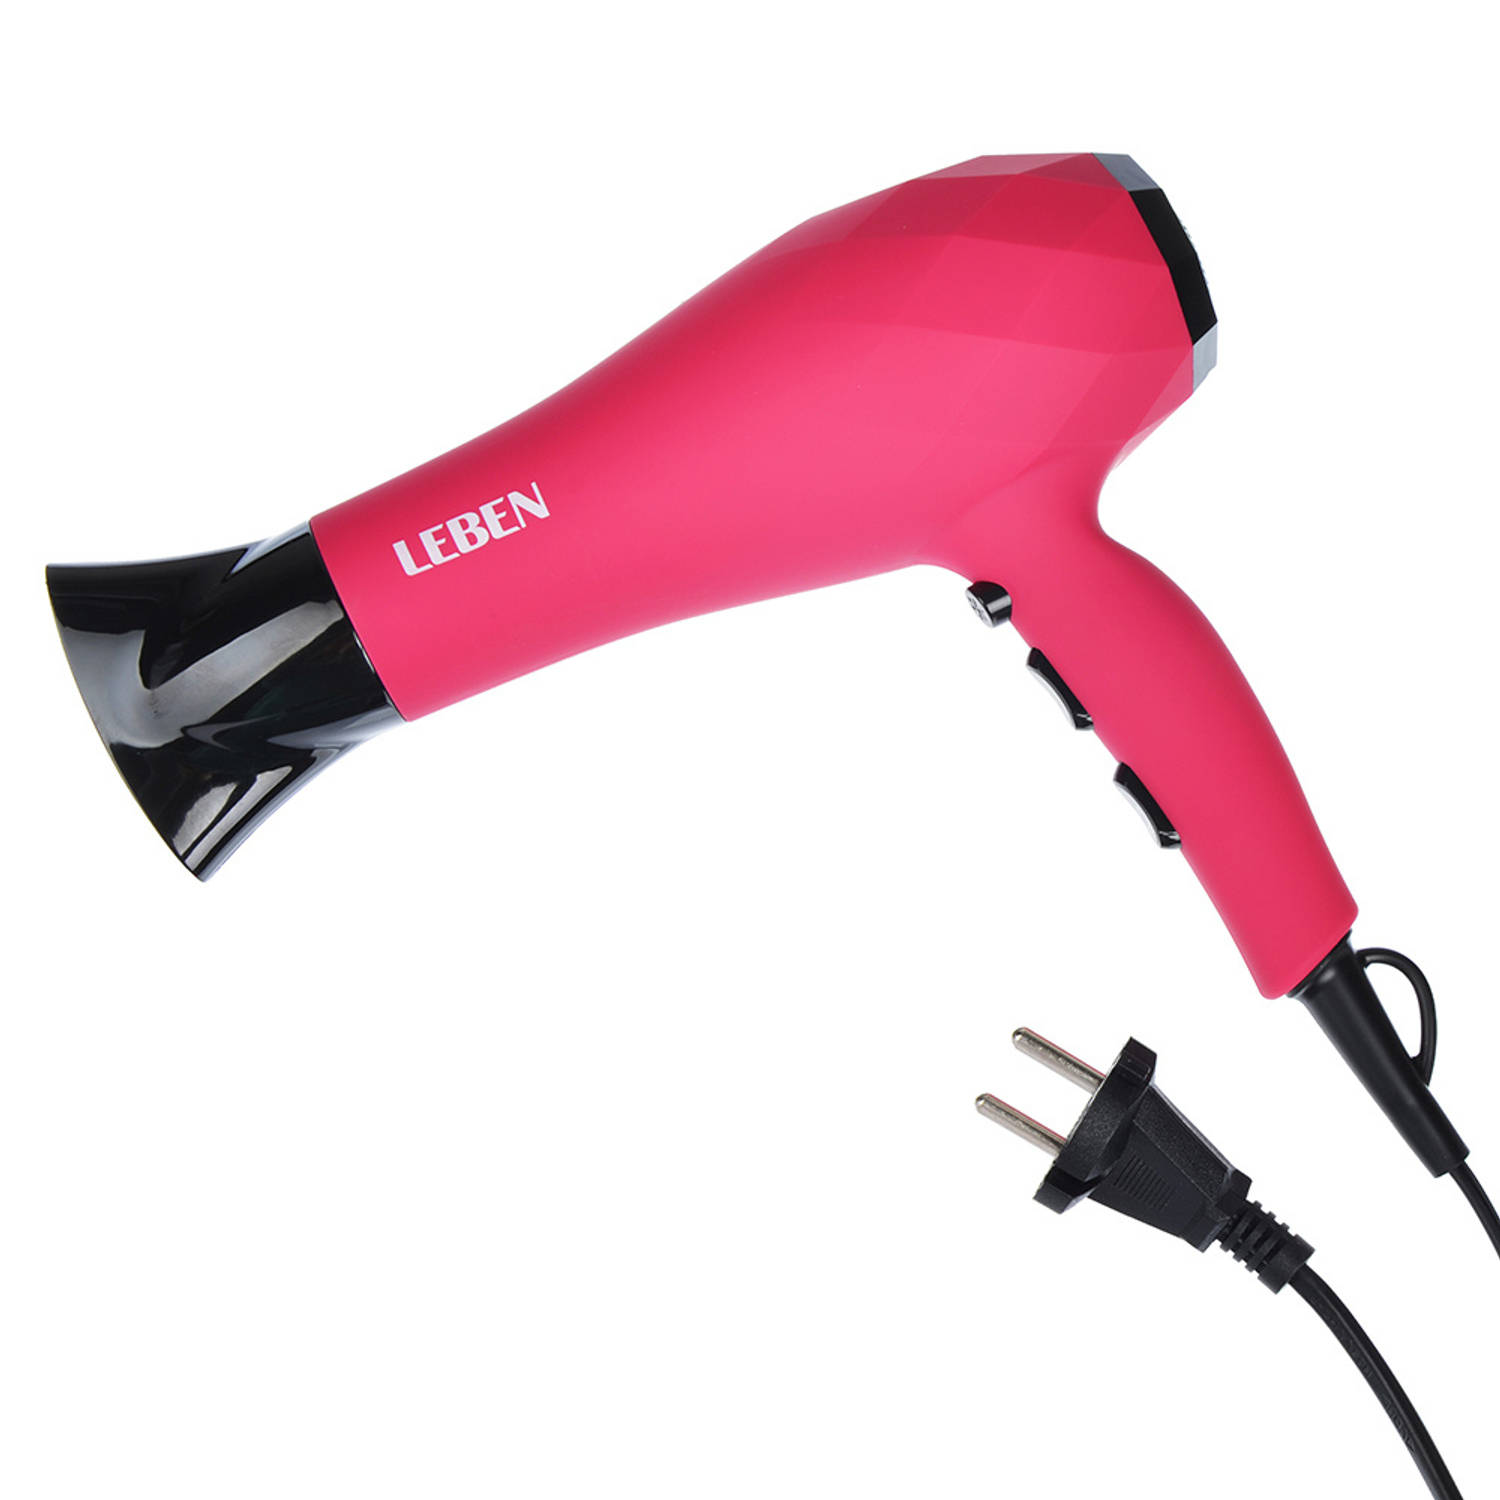 Leben Haardroger Pink Pro 3 Temp. 2 Speed Cool Shot 2200 Watt